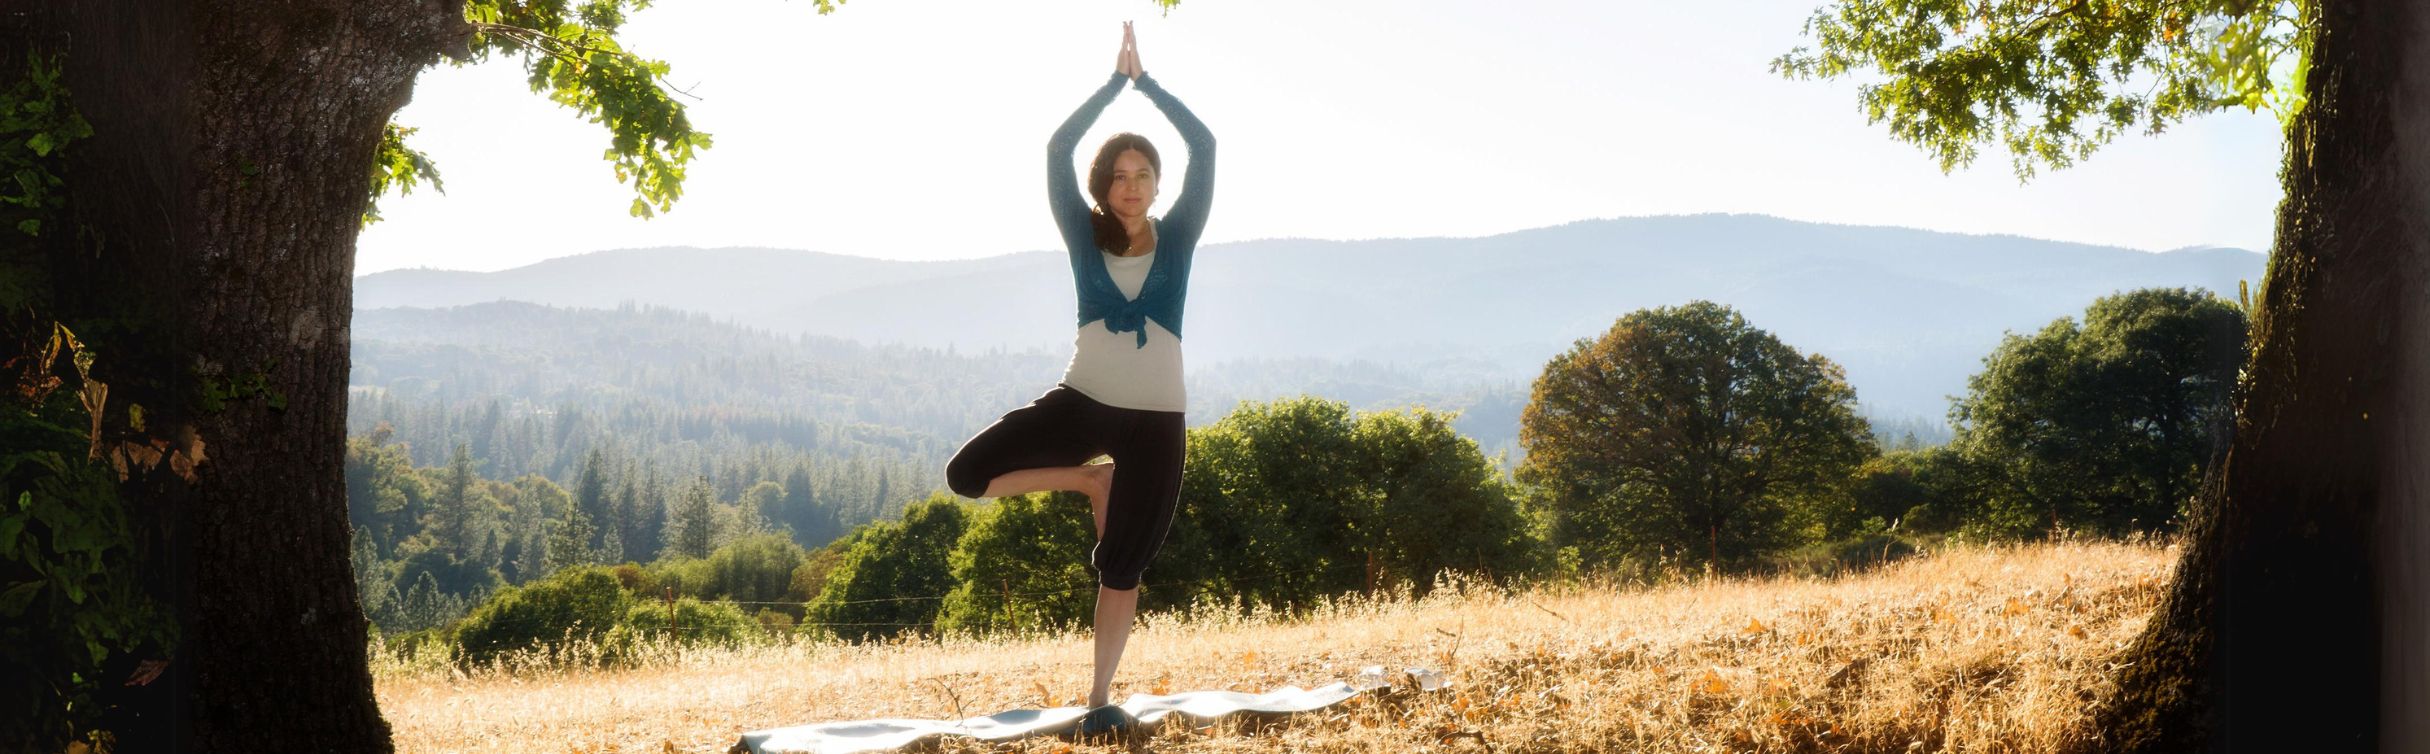 Yoga Getaway Energize your summer